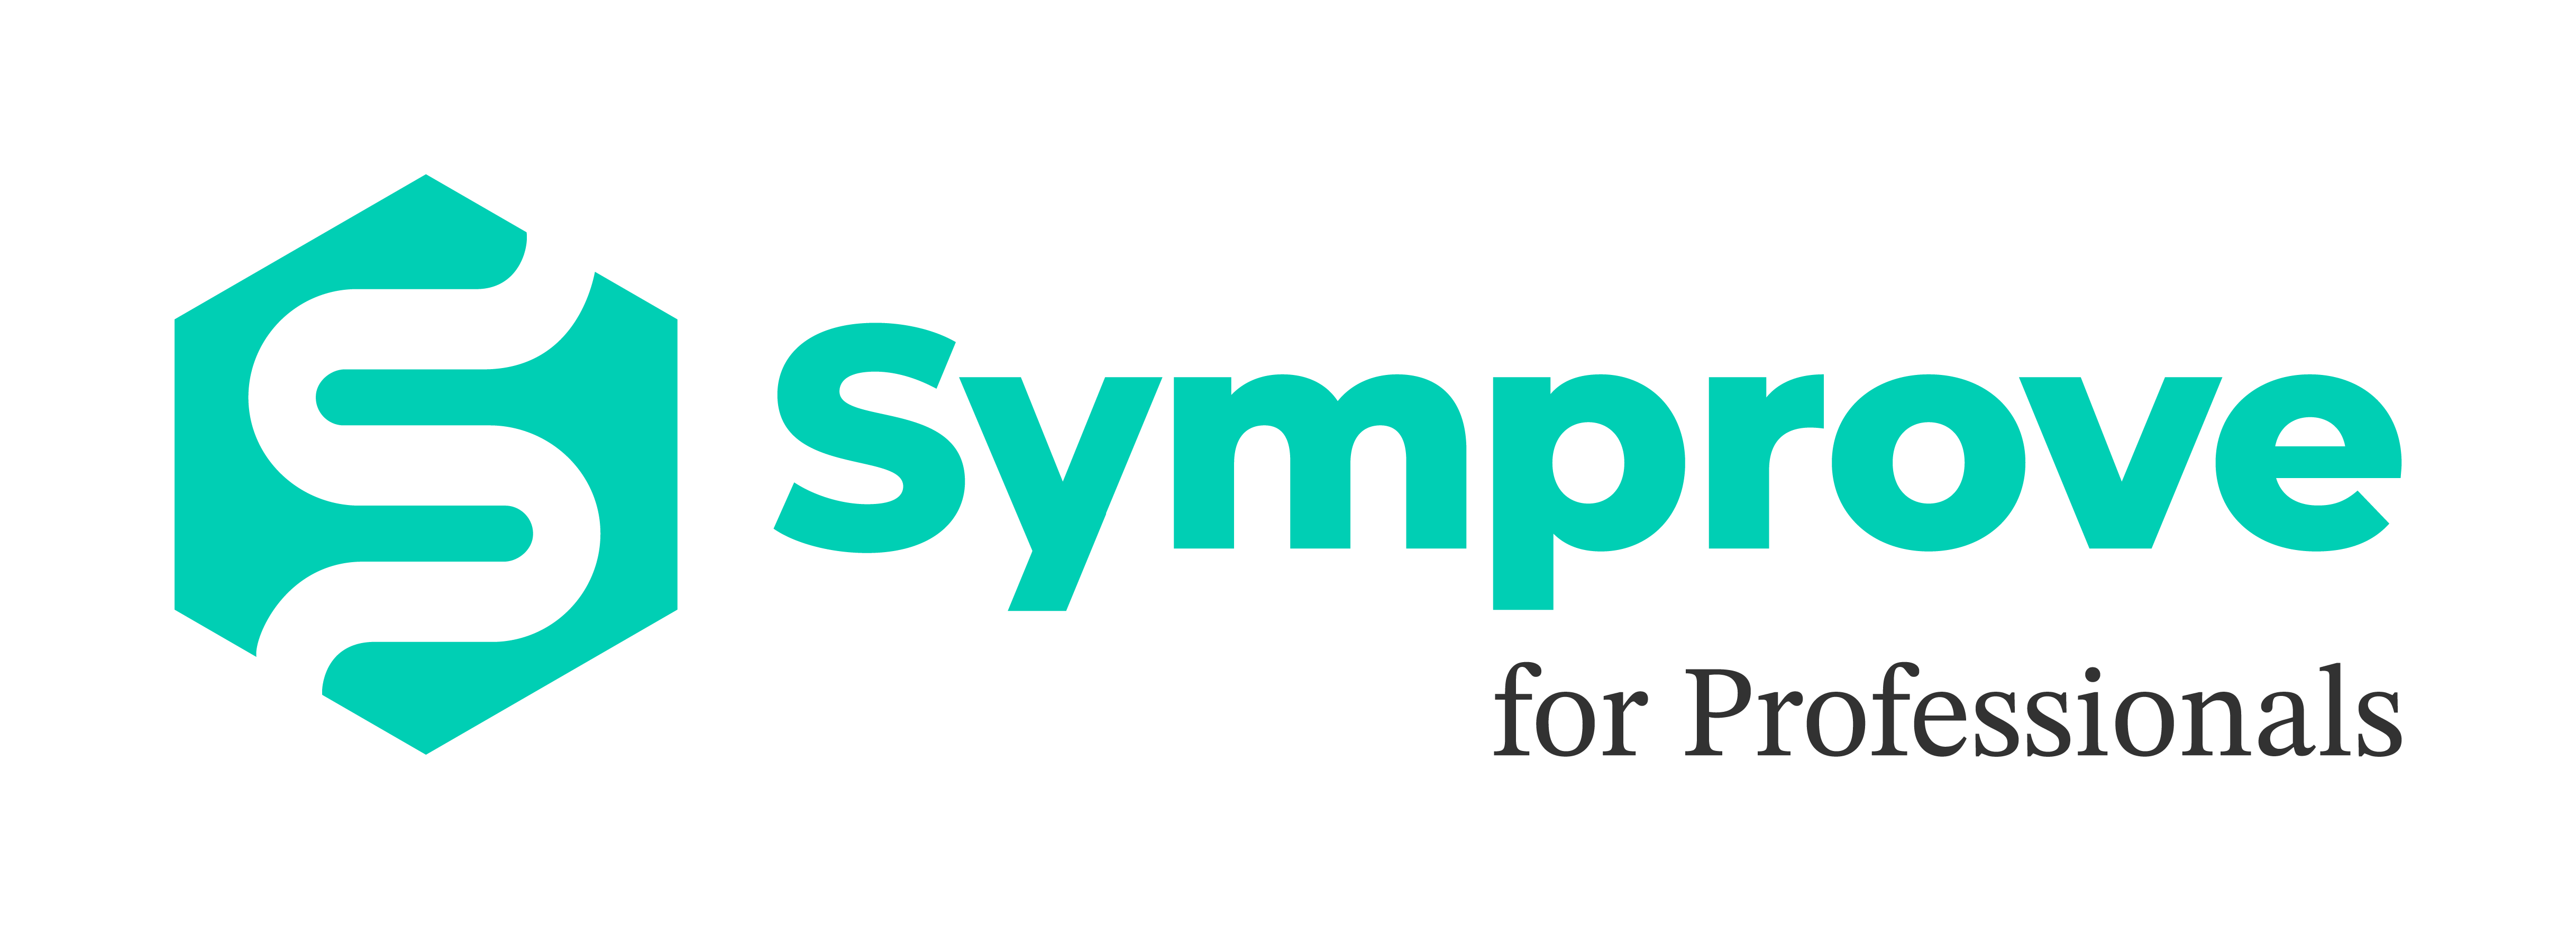 symprove logo